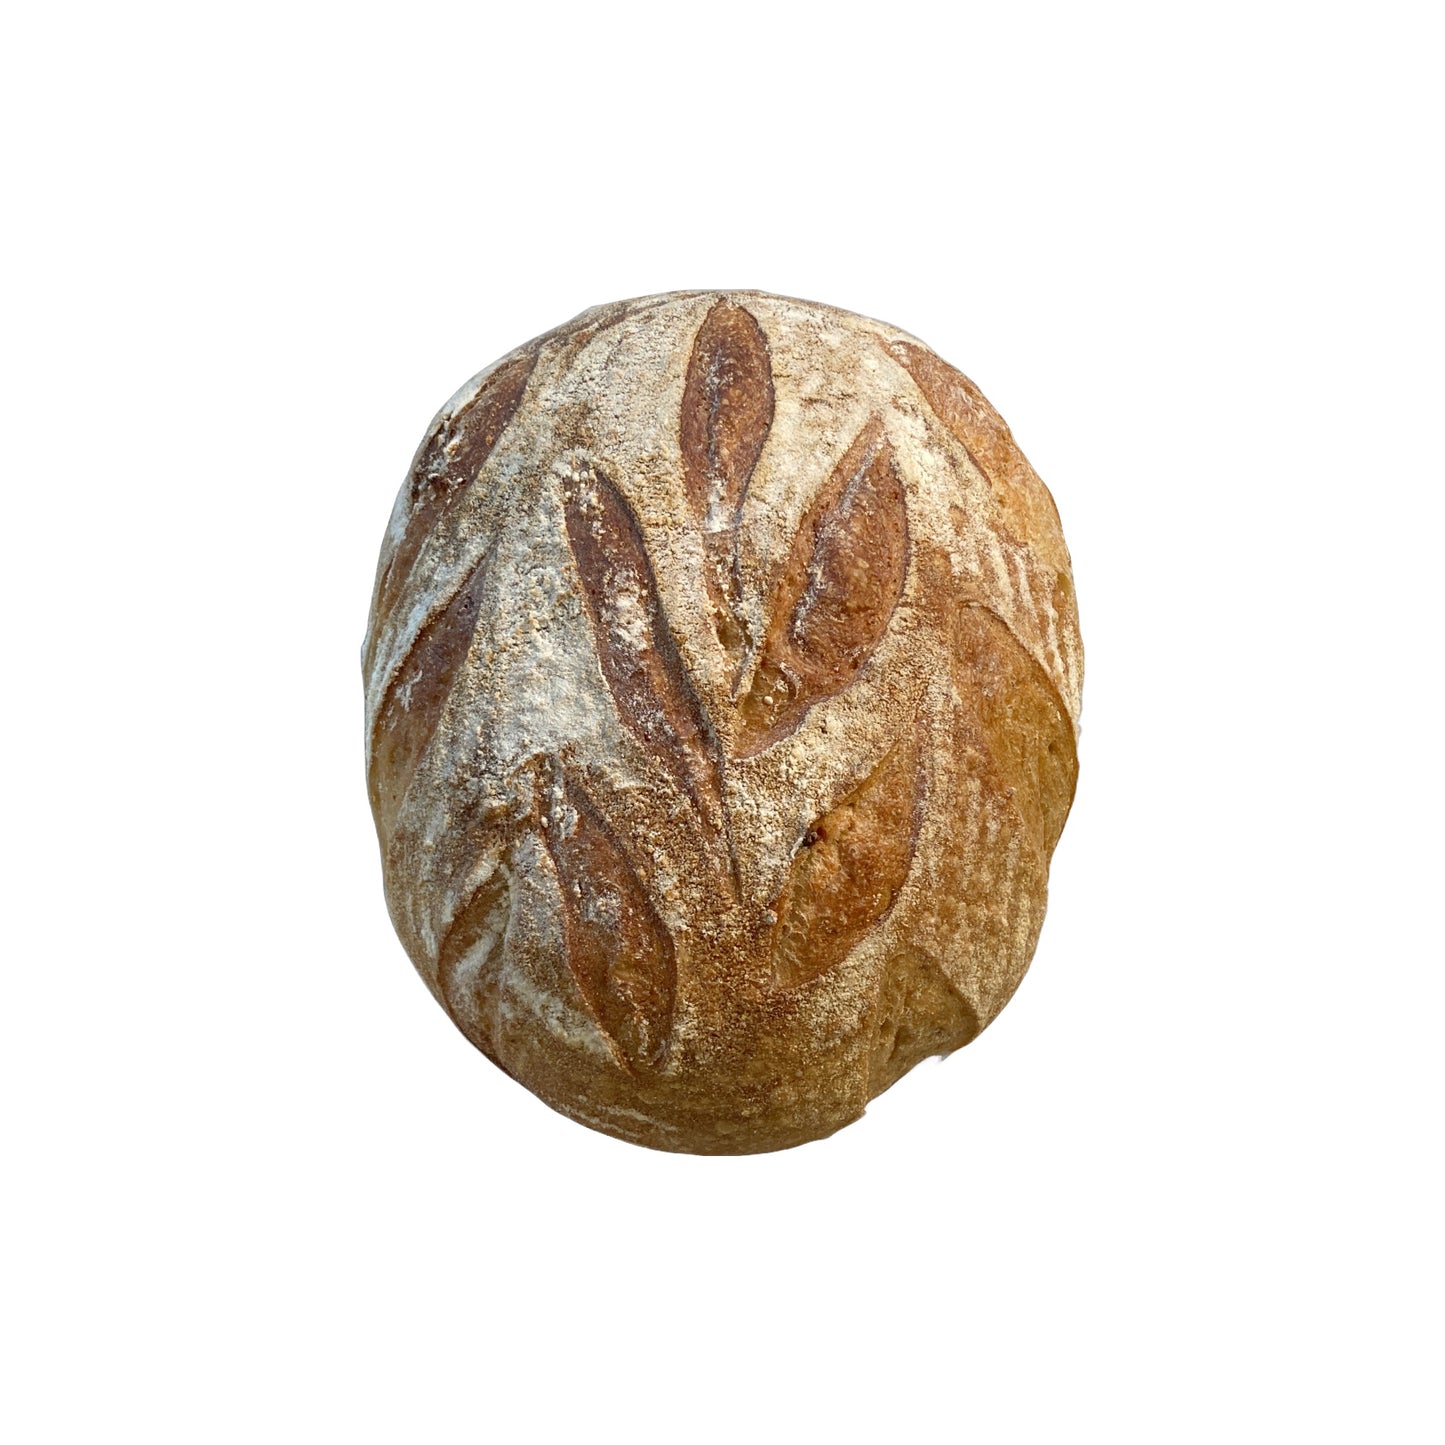 Cotswold Crunch Loaf